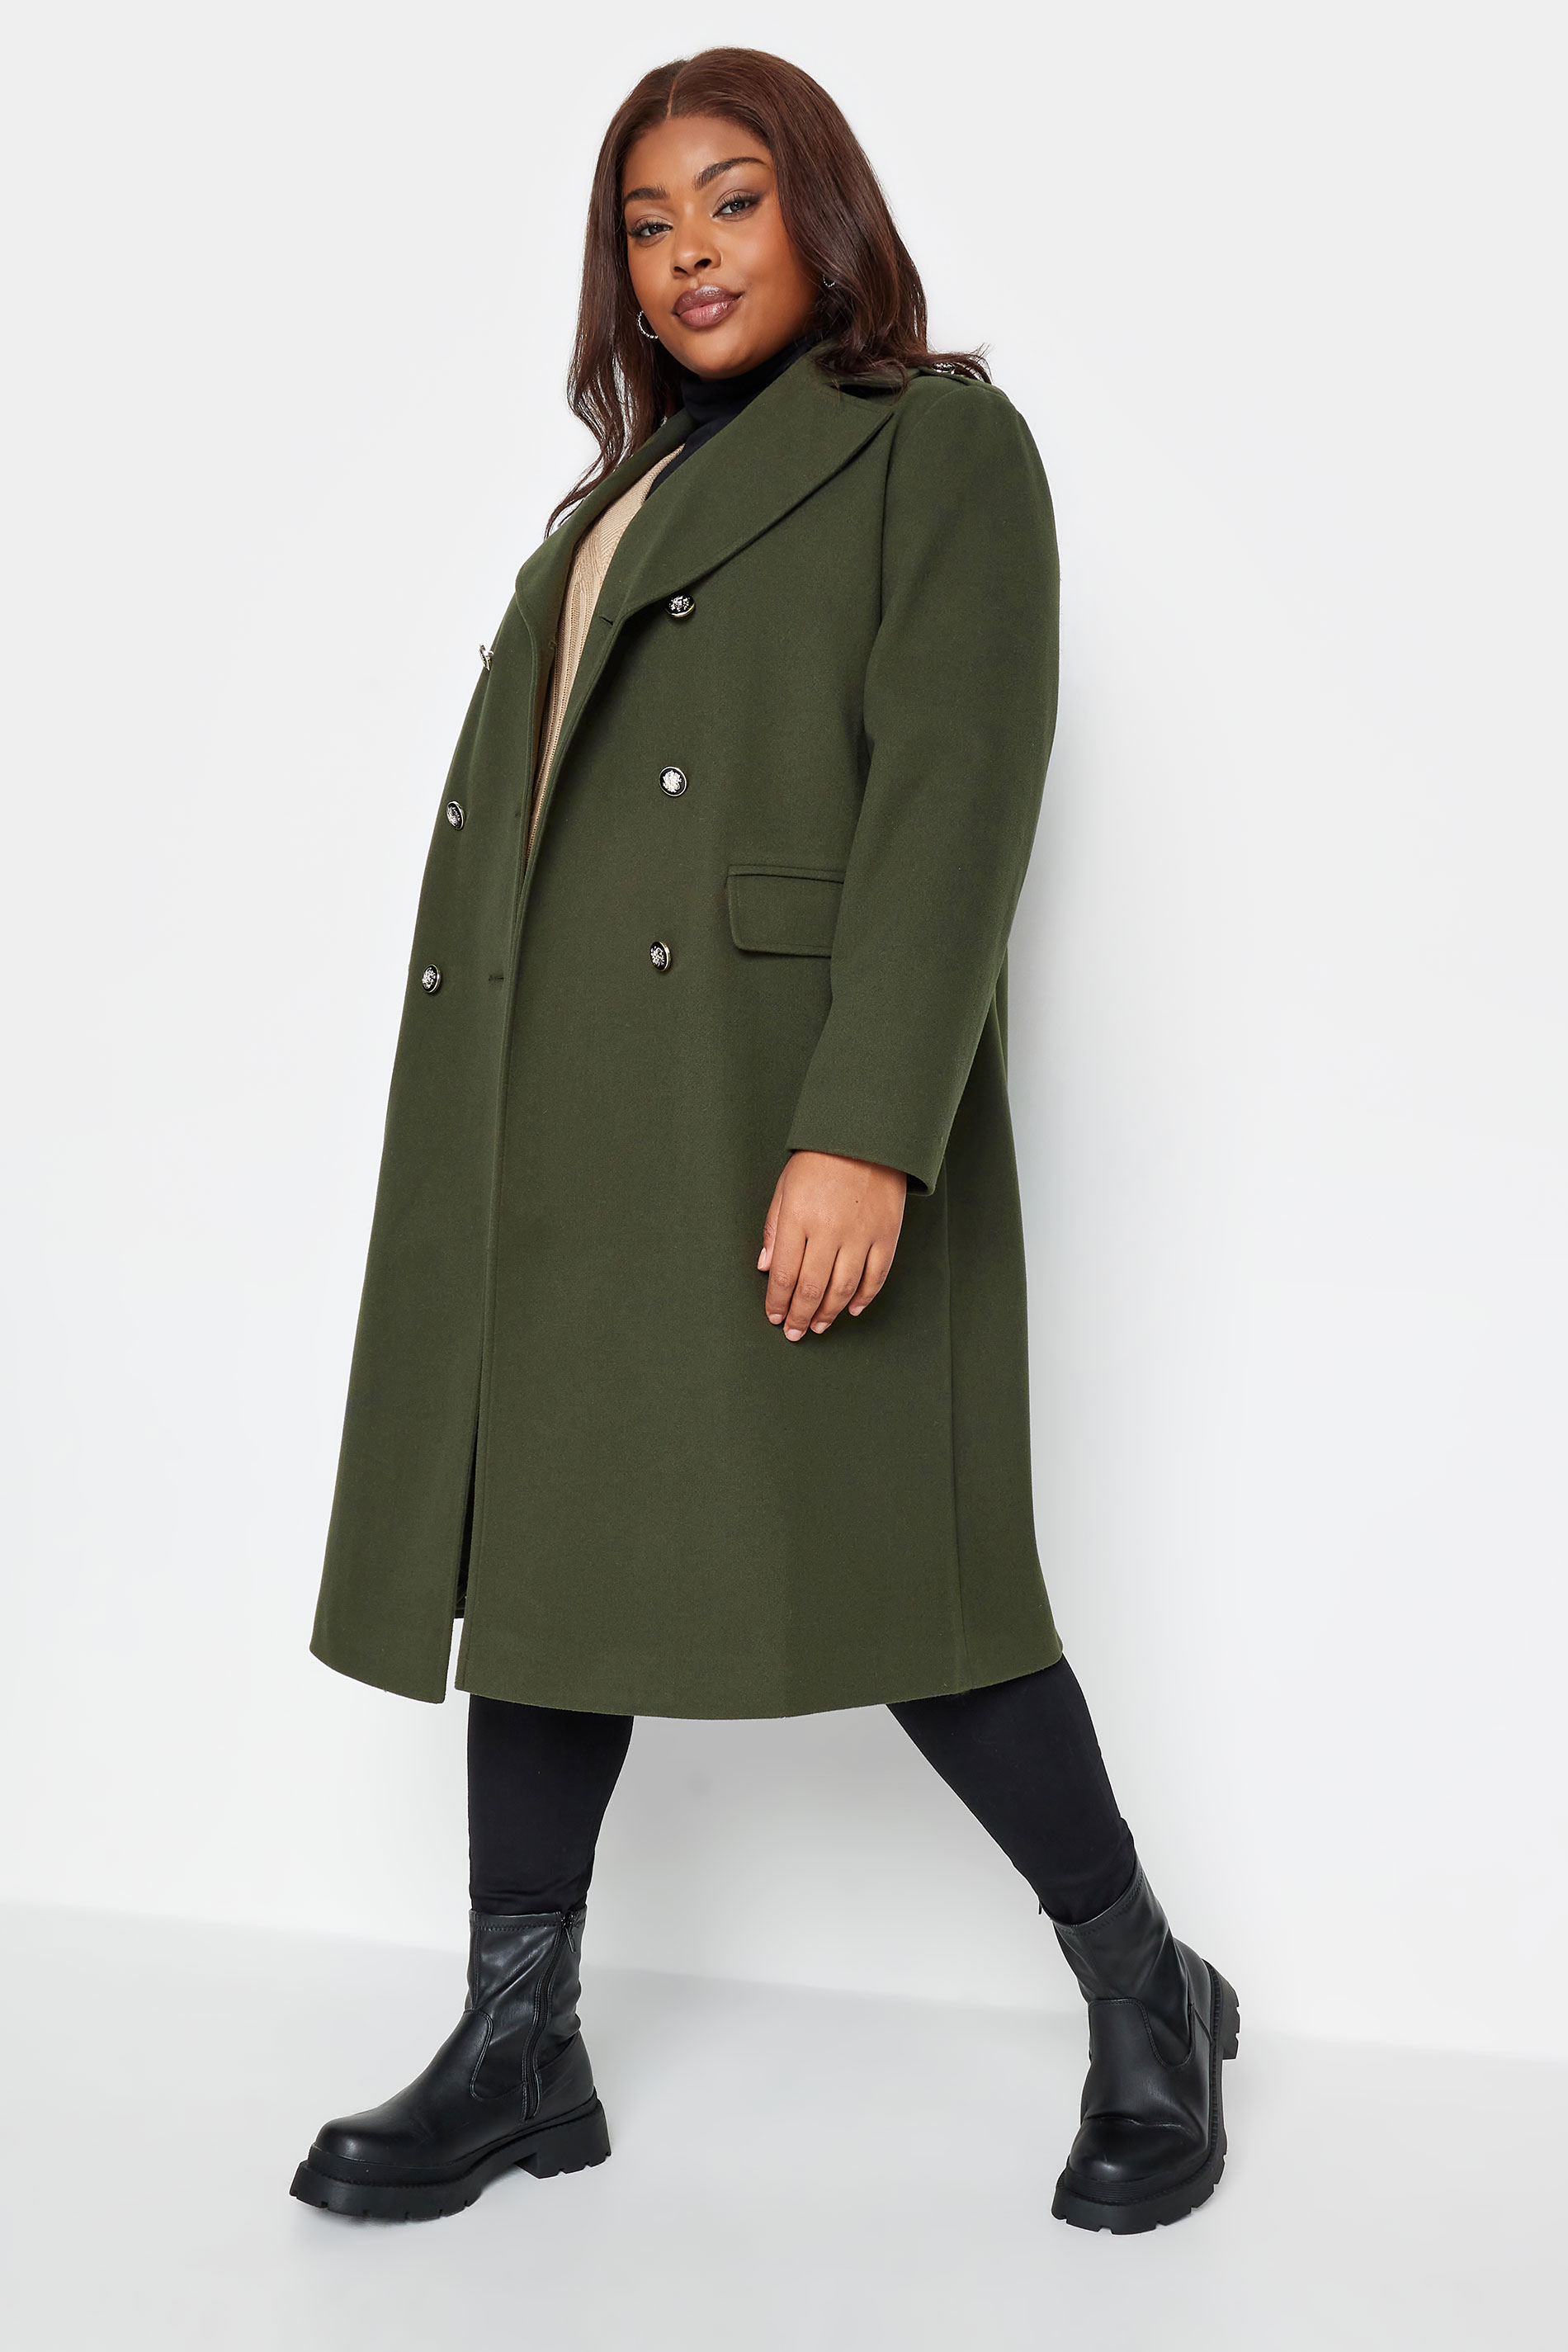 YOURS Plus Size Khaki Green Longline Military Coat | Yours Clothing 3